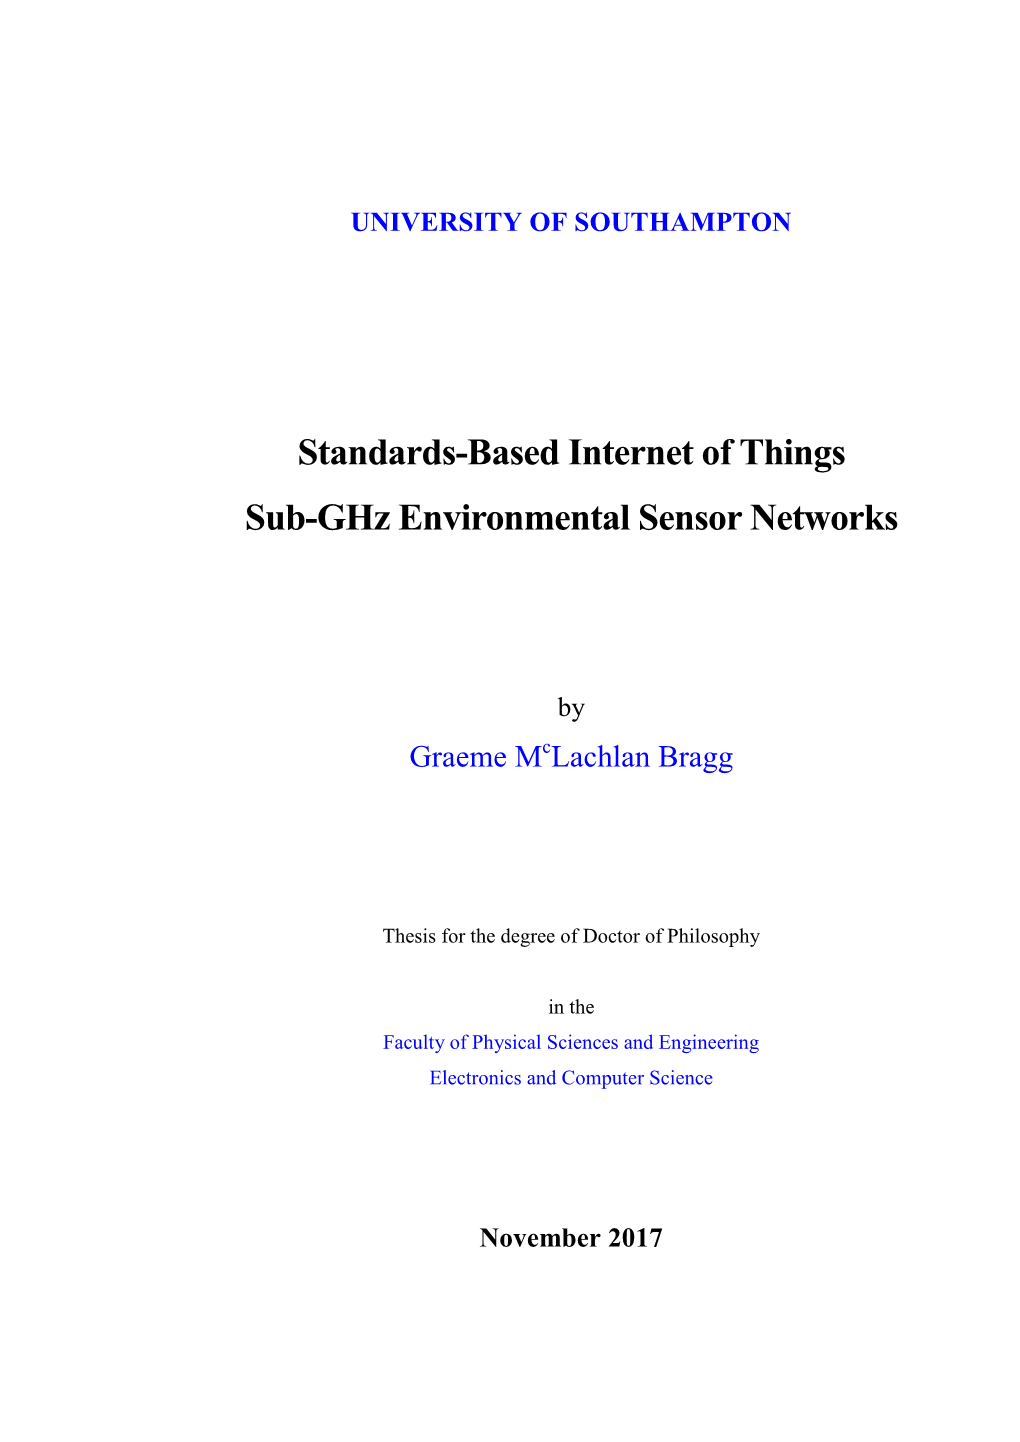 Standards-Based Internet of Things Sub-Ghz Environmental Sensor Networks